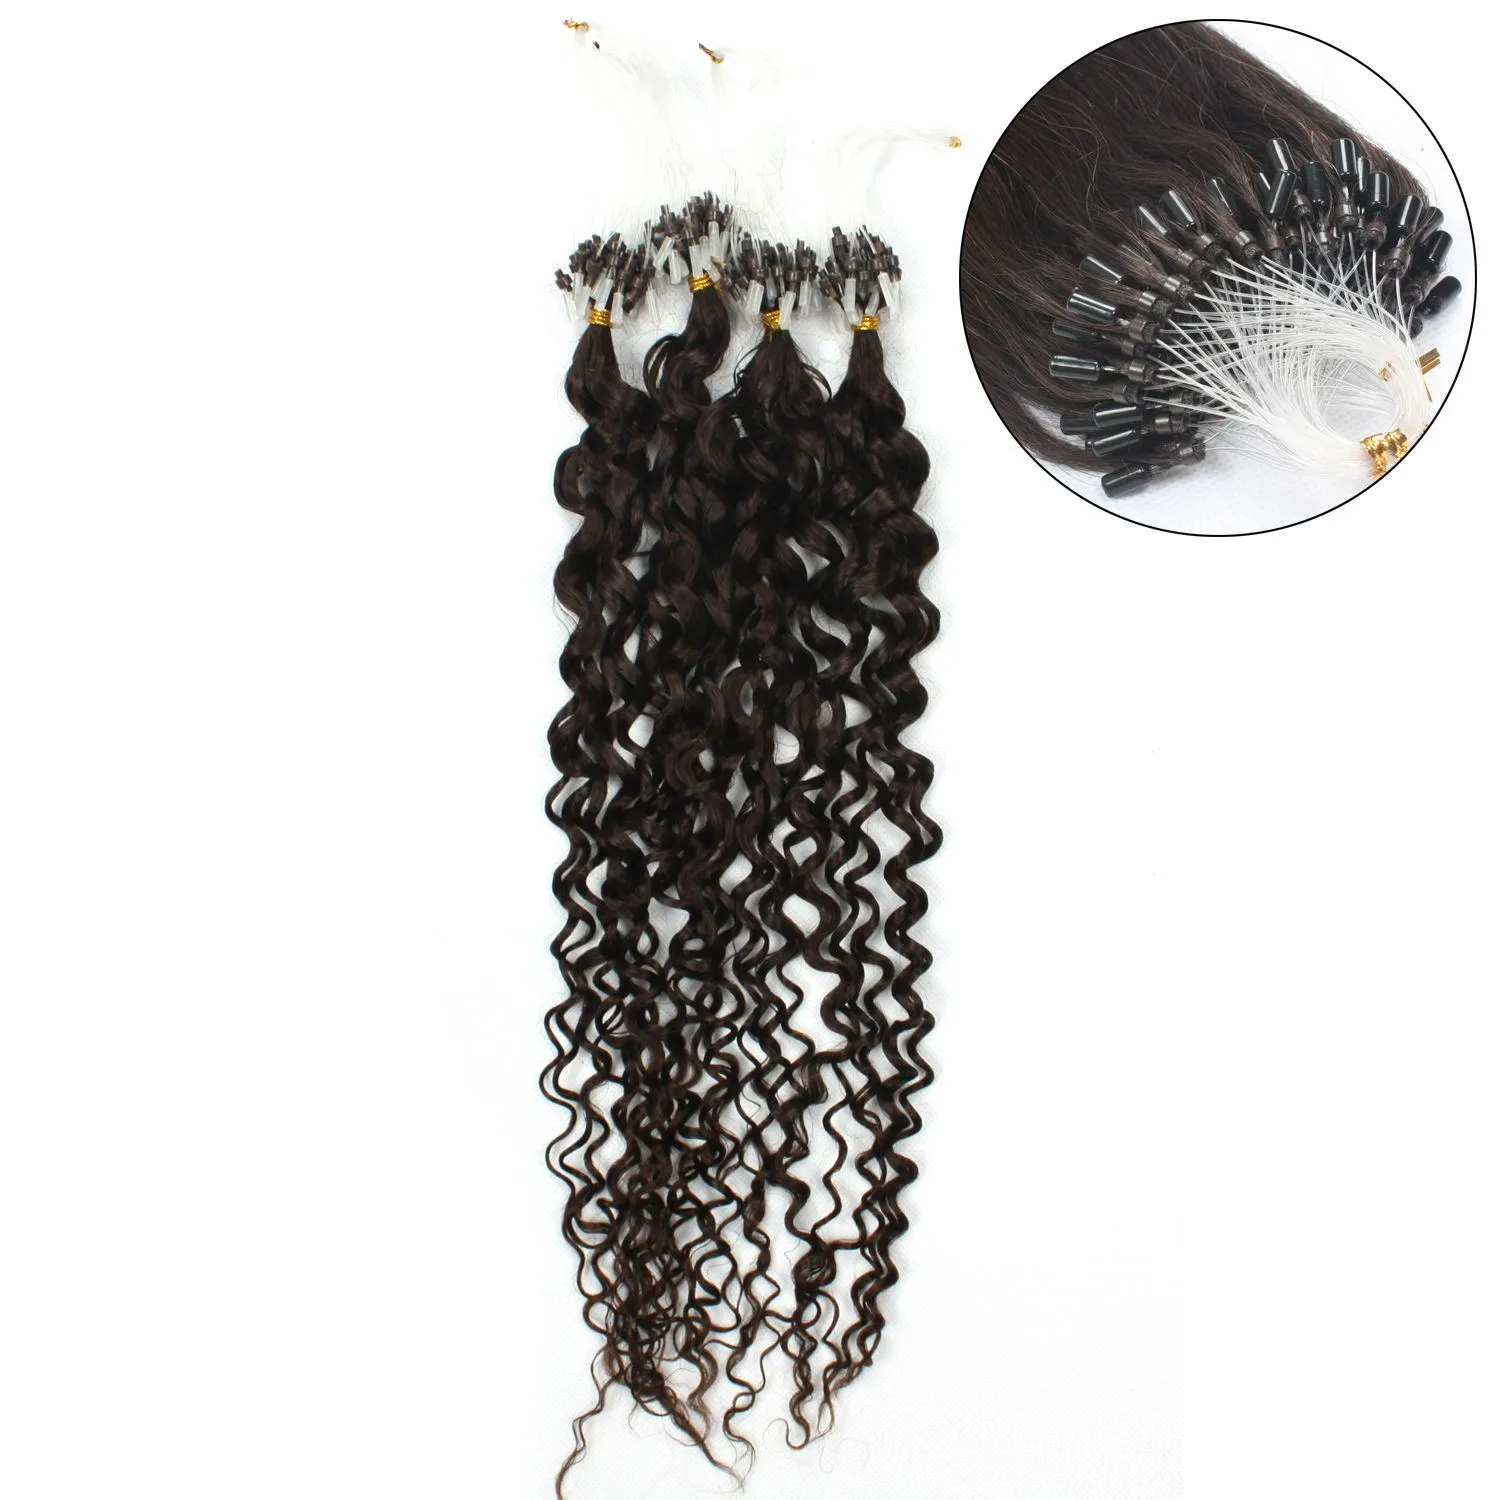 Elibess Hair-Micro ring Hair Extension 0.8g / 스트랜드 200 스트랜드 / 로트 # 1 # 1B # 4 # 6 색상 웨이브 루프 마이크로 링 헤어 확장